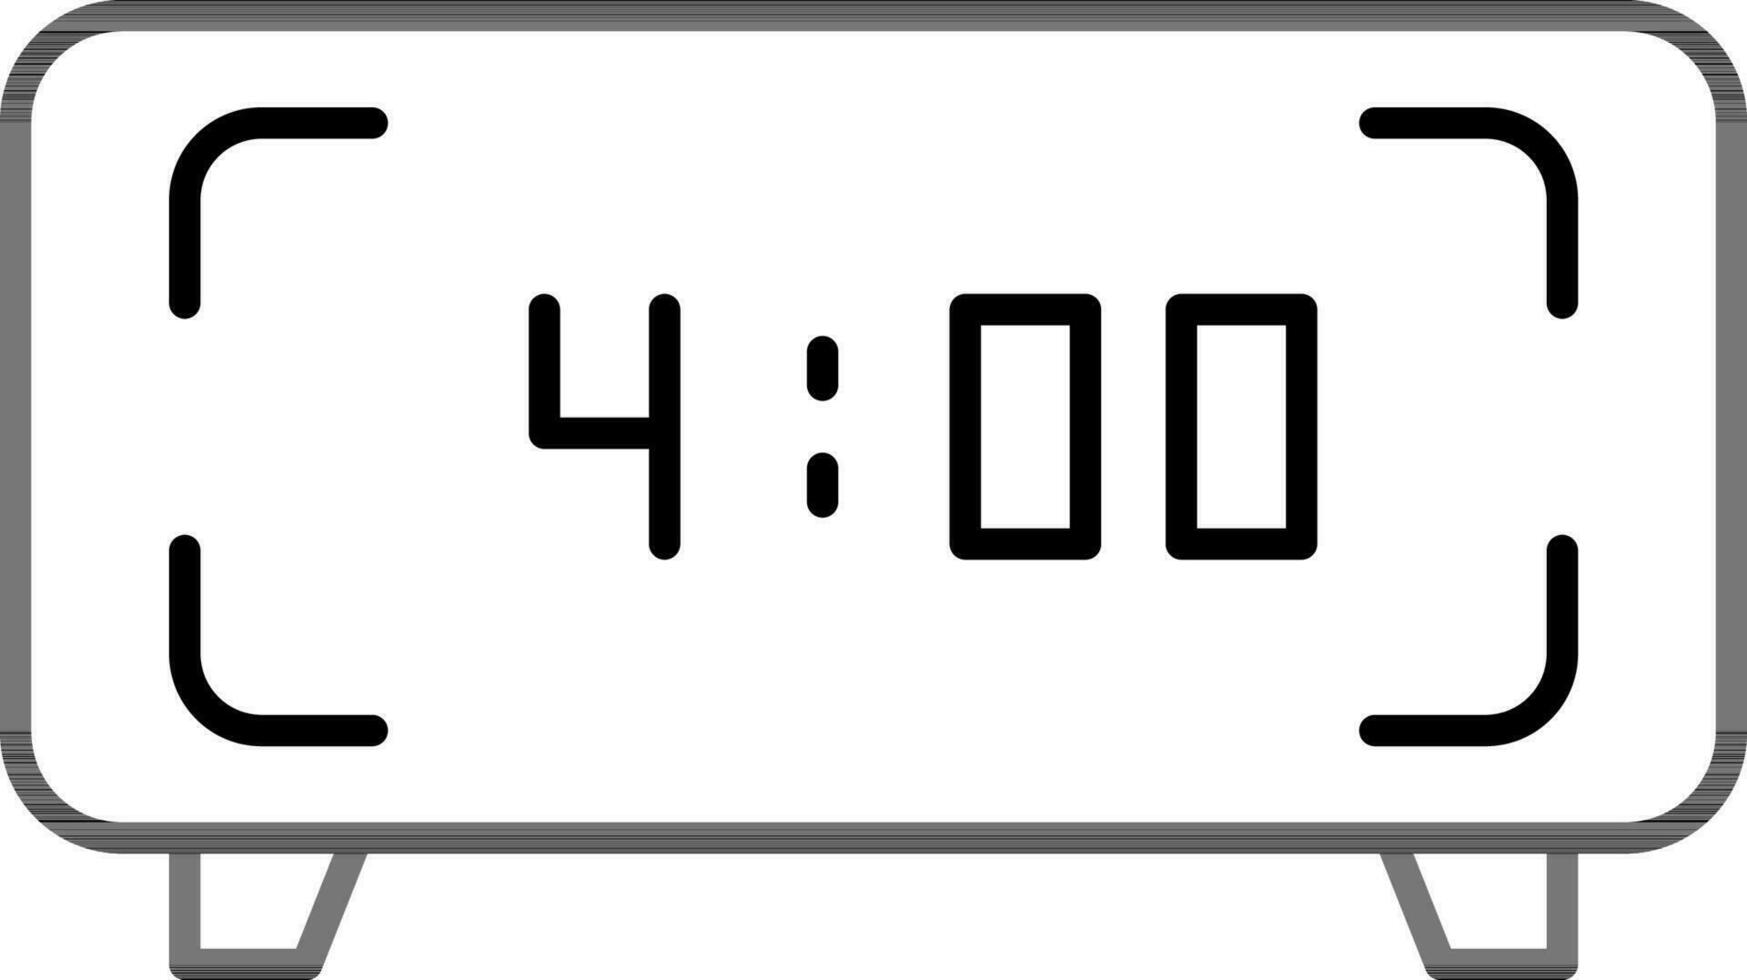 Digital clock screen icon in line art. vector